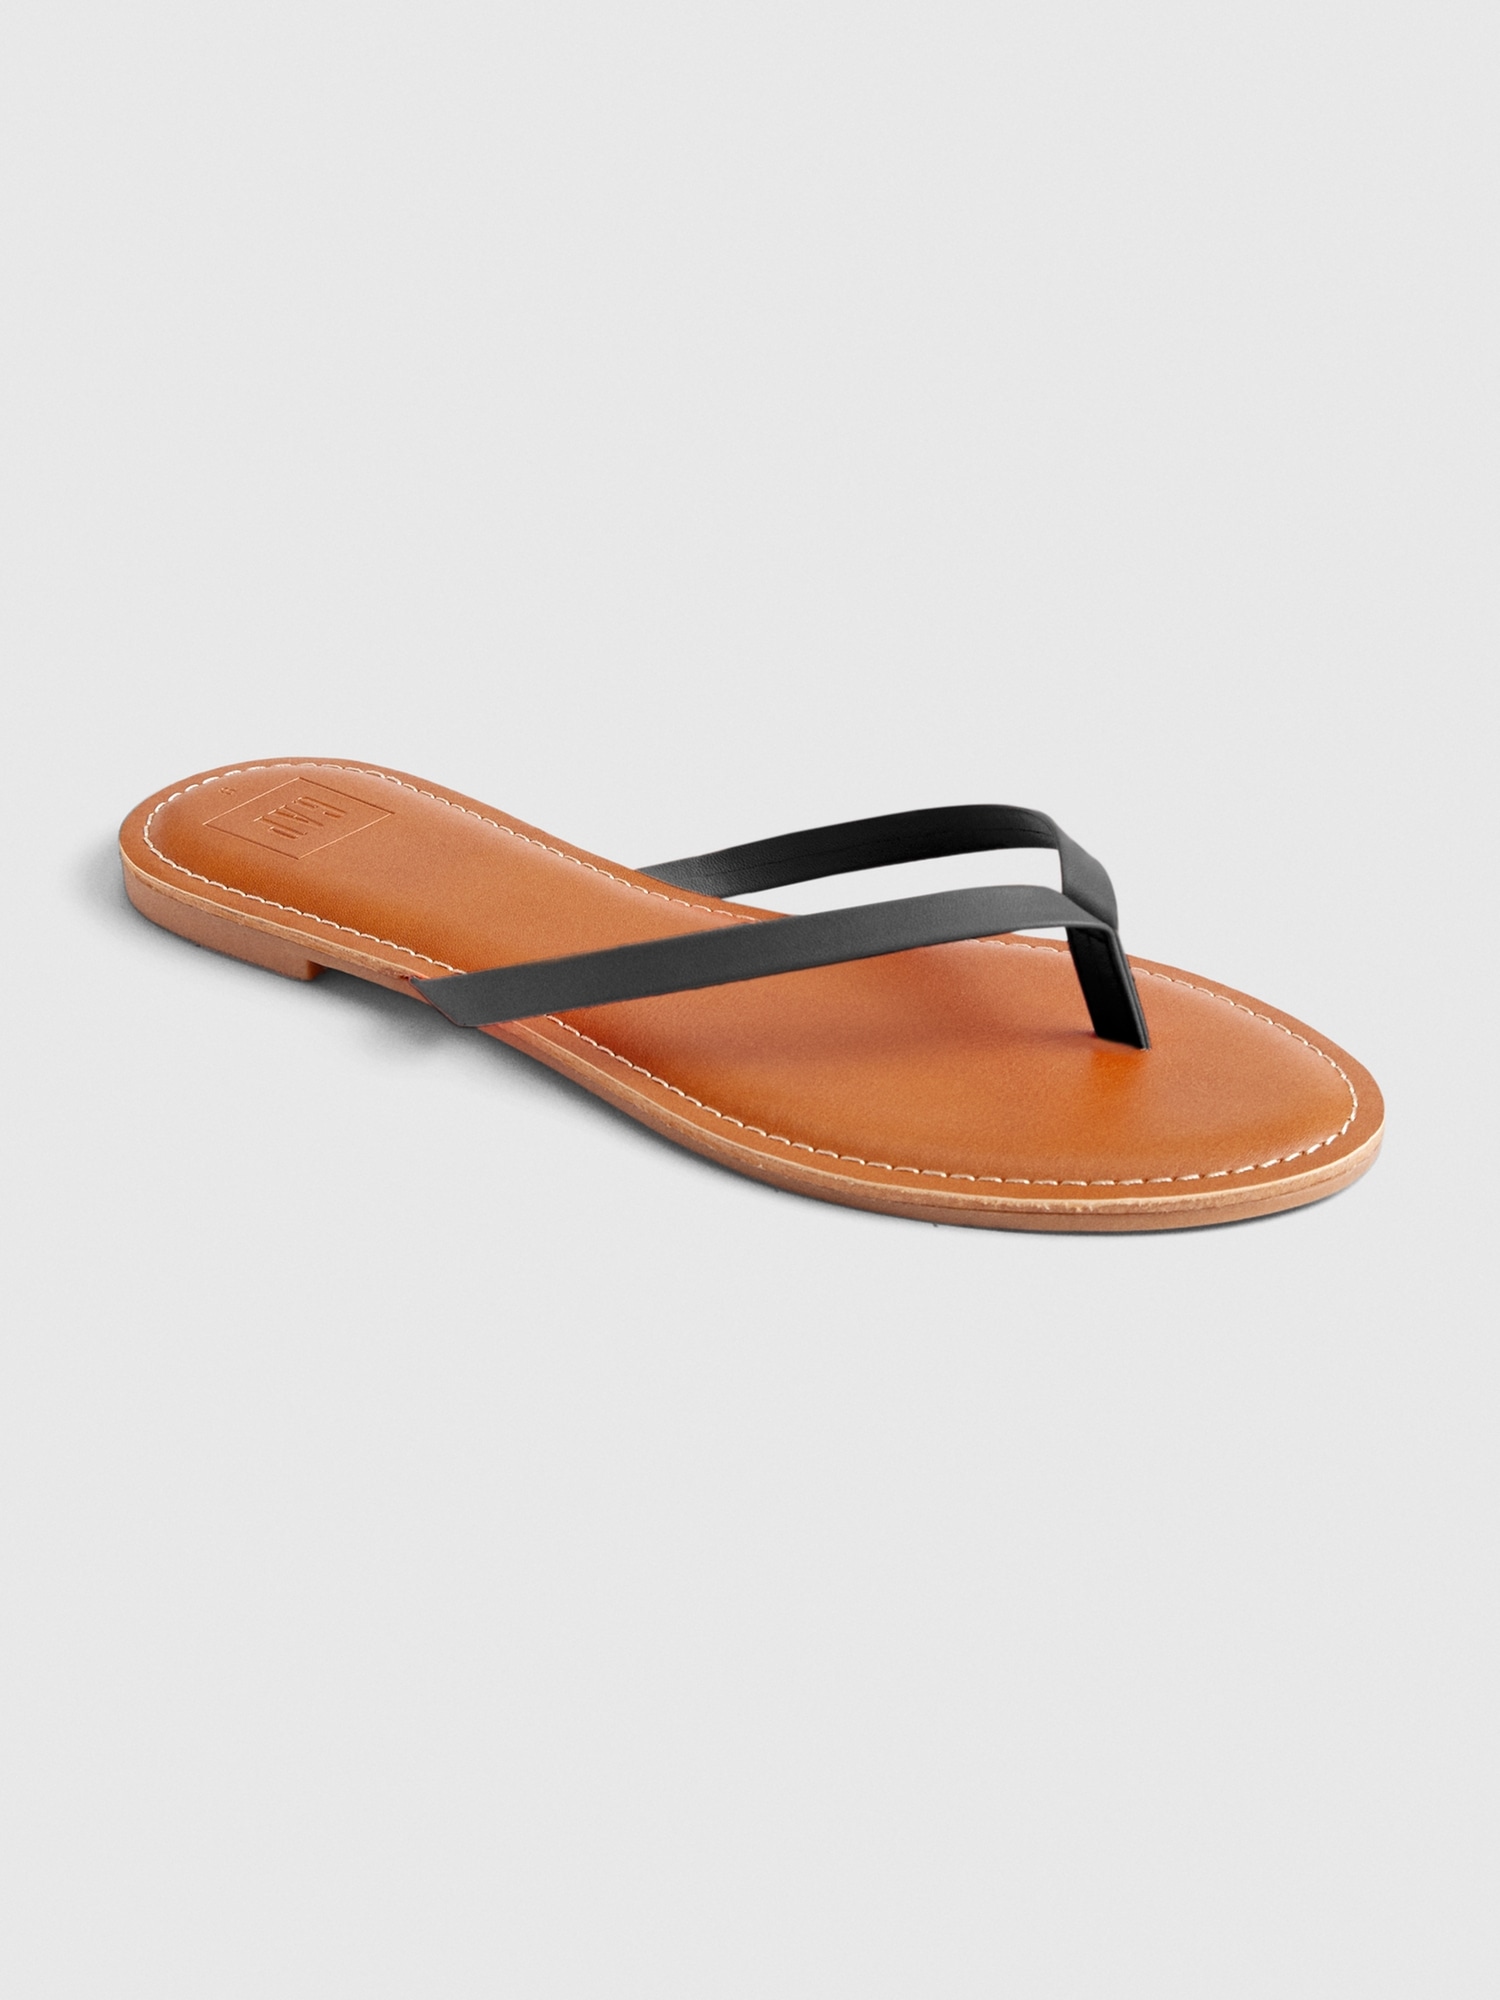 Faux Leather Flip Flops | Gap